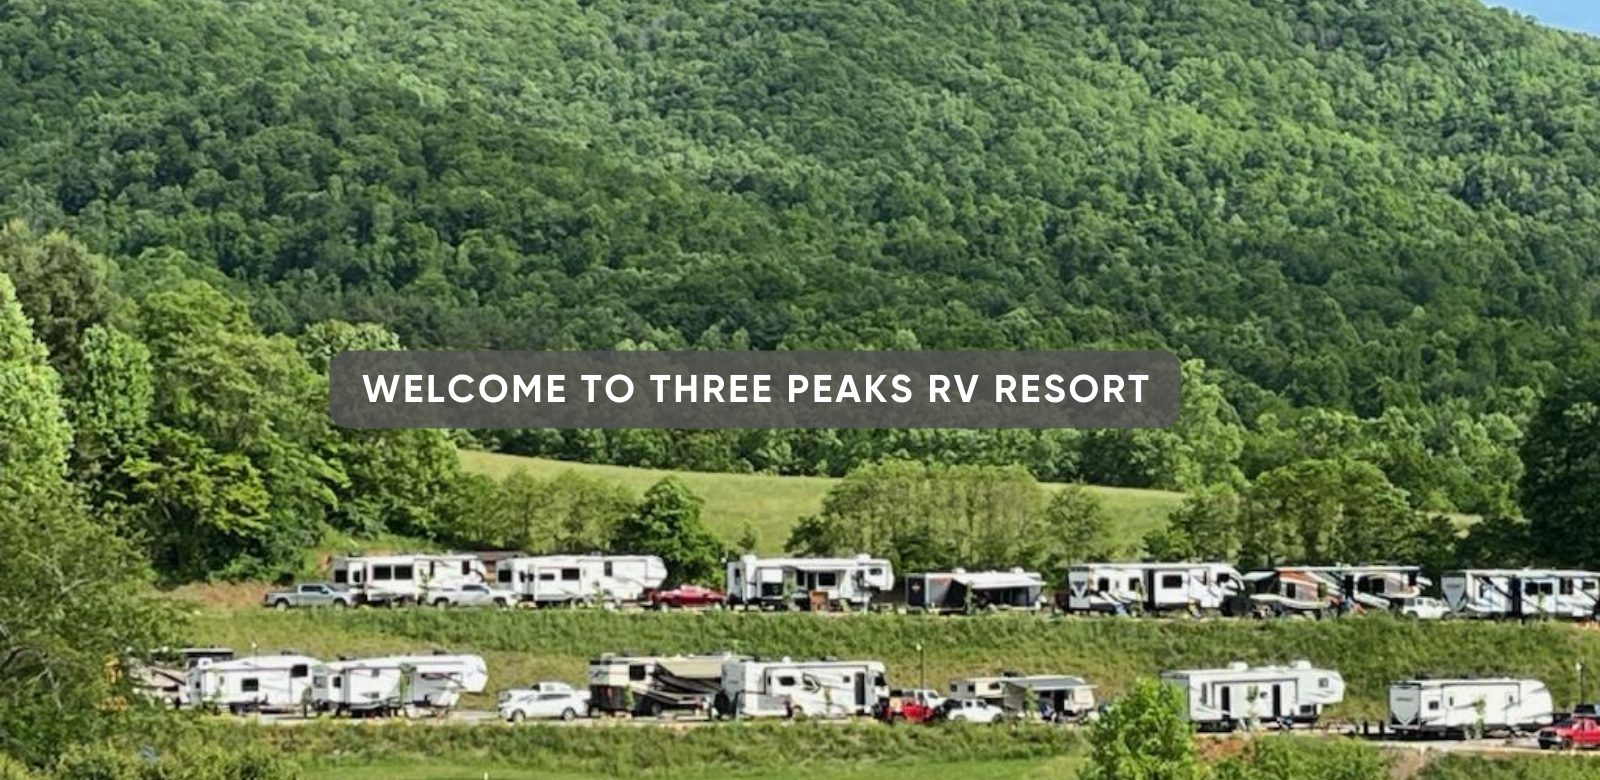 RV Campground in North Carolina Mountains